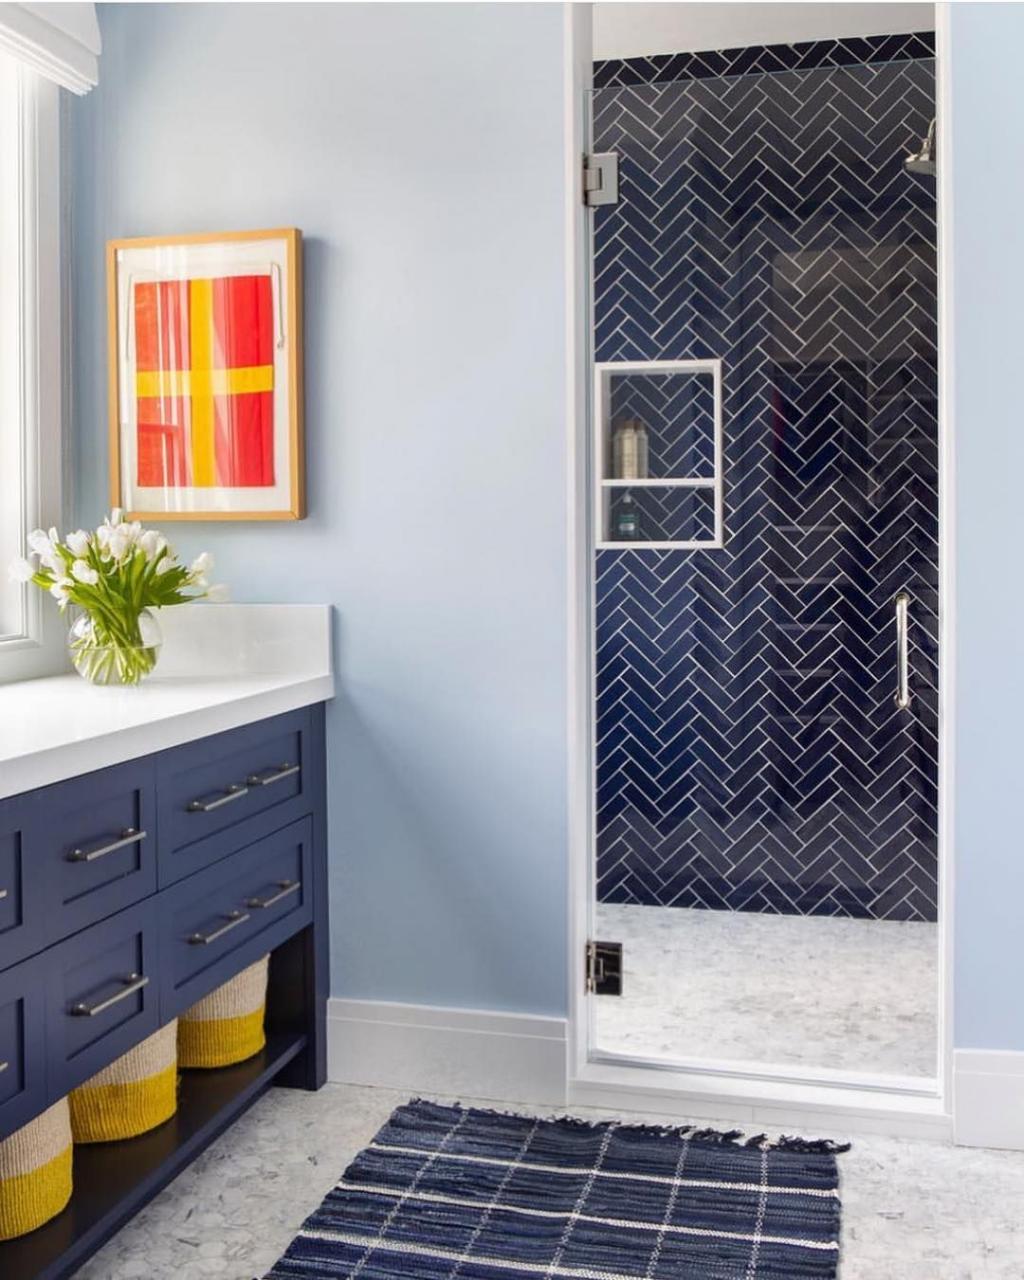 Bathrooms Of Instagram (Bathroom Design Ideas) Light blue bathroom